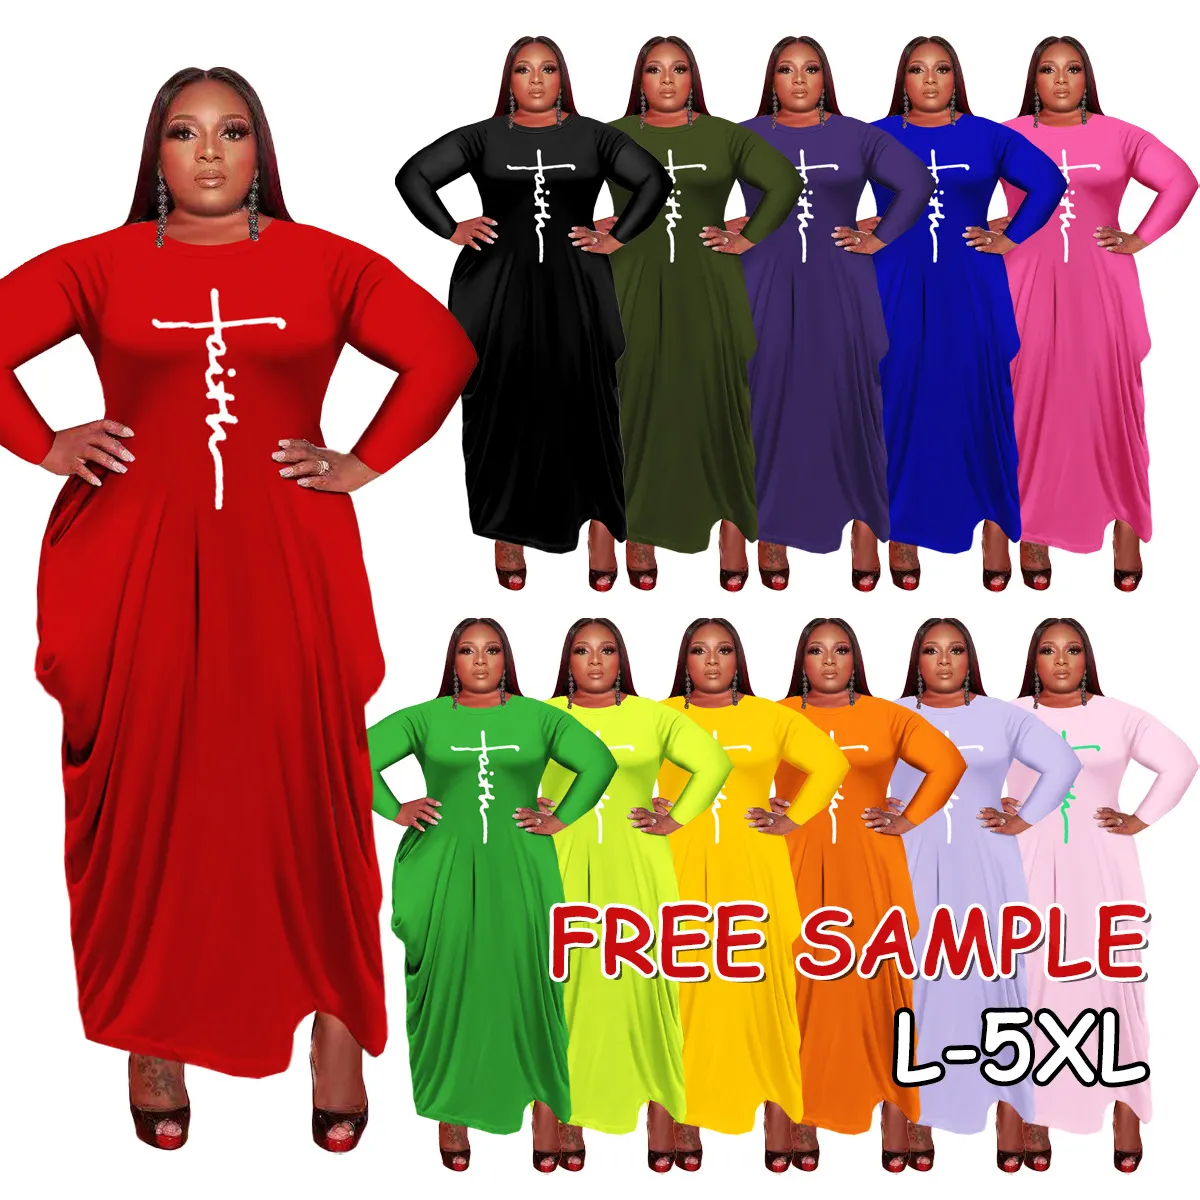 Magicmk Wholesales FallWomen Clothes Long Sleeve Casual Bodycon 5xl Plus Size Dress Women Clothing Plus Size Women's Dresses